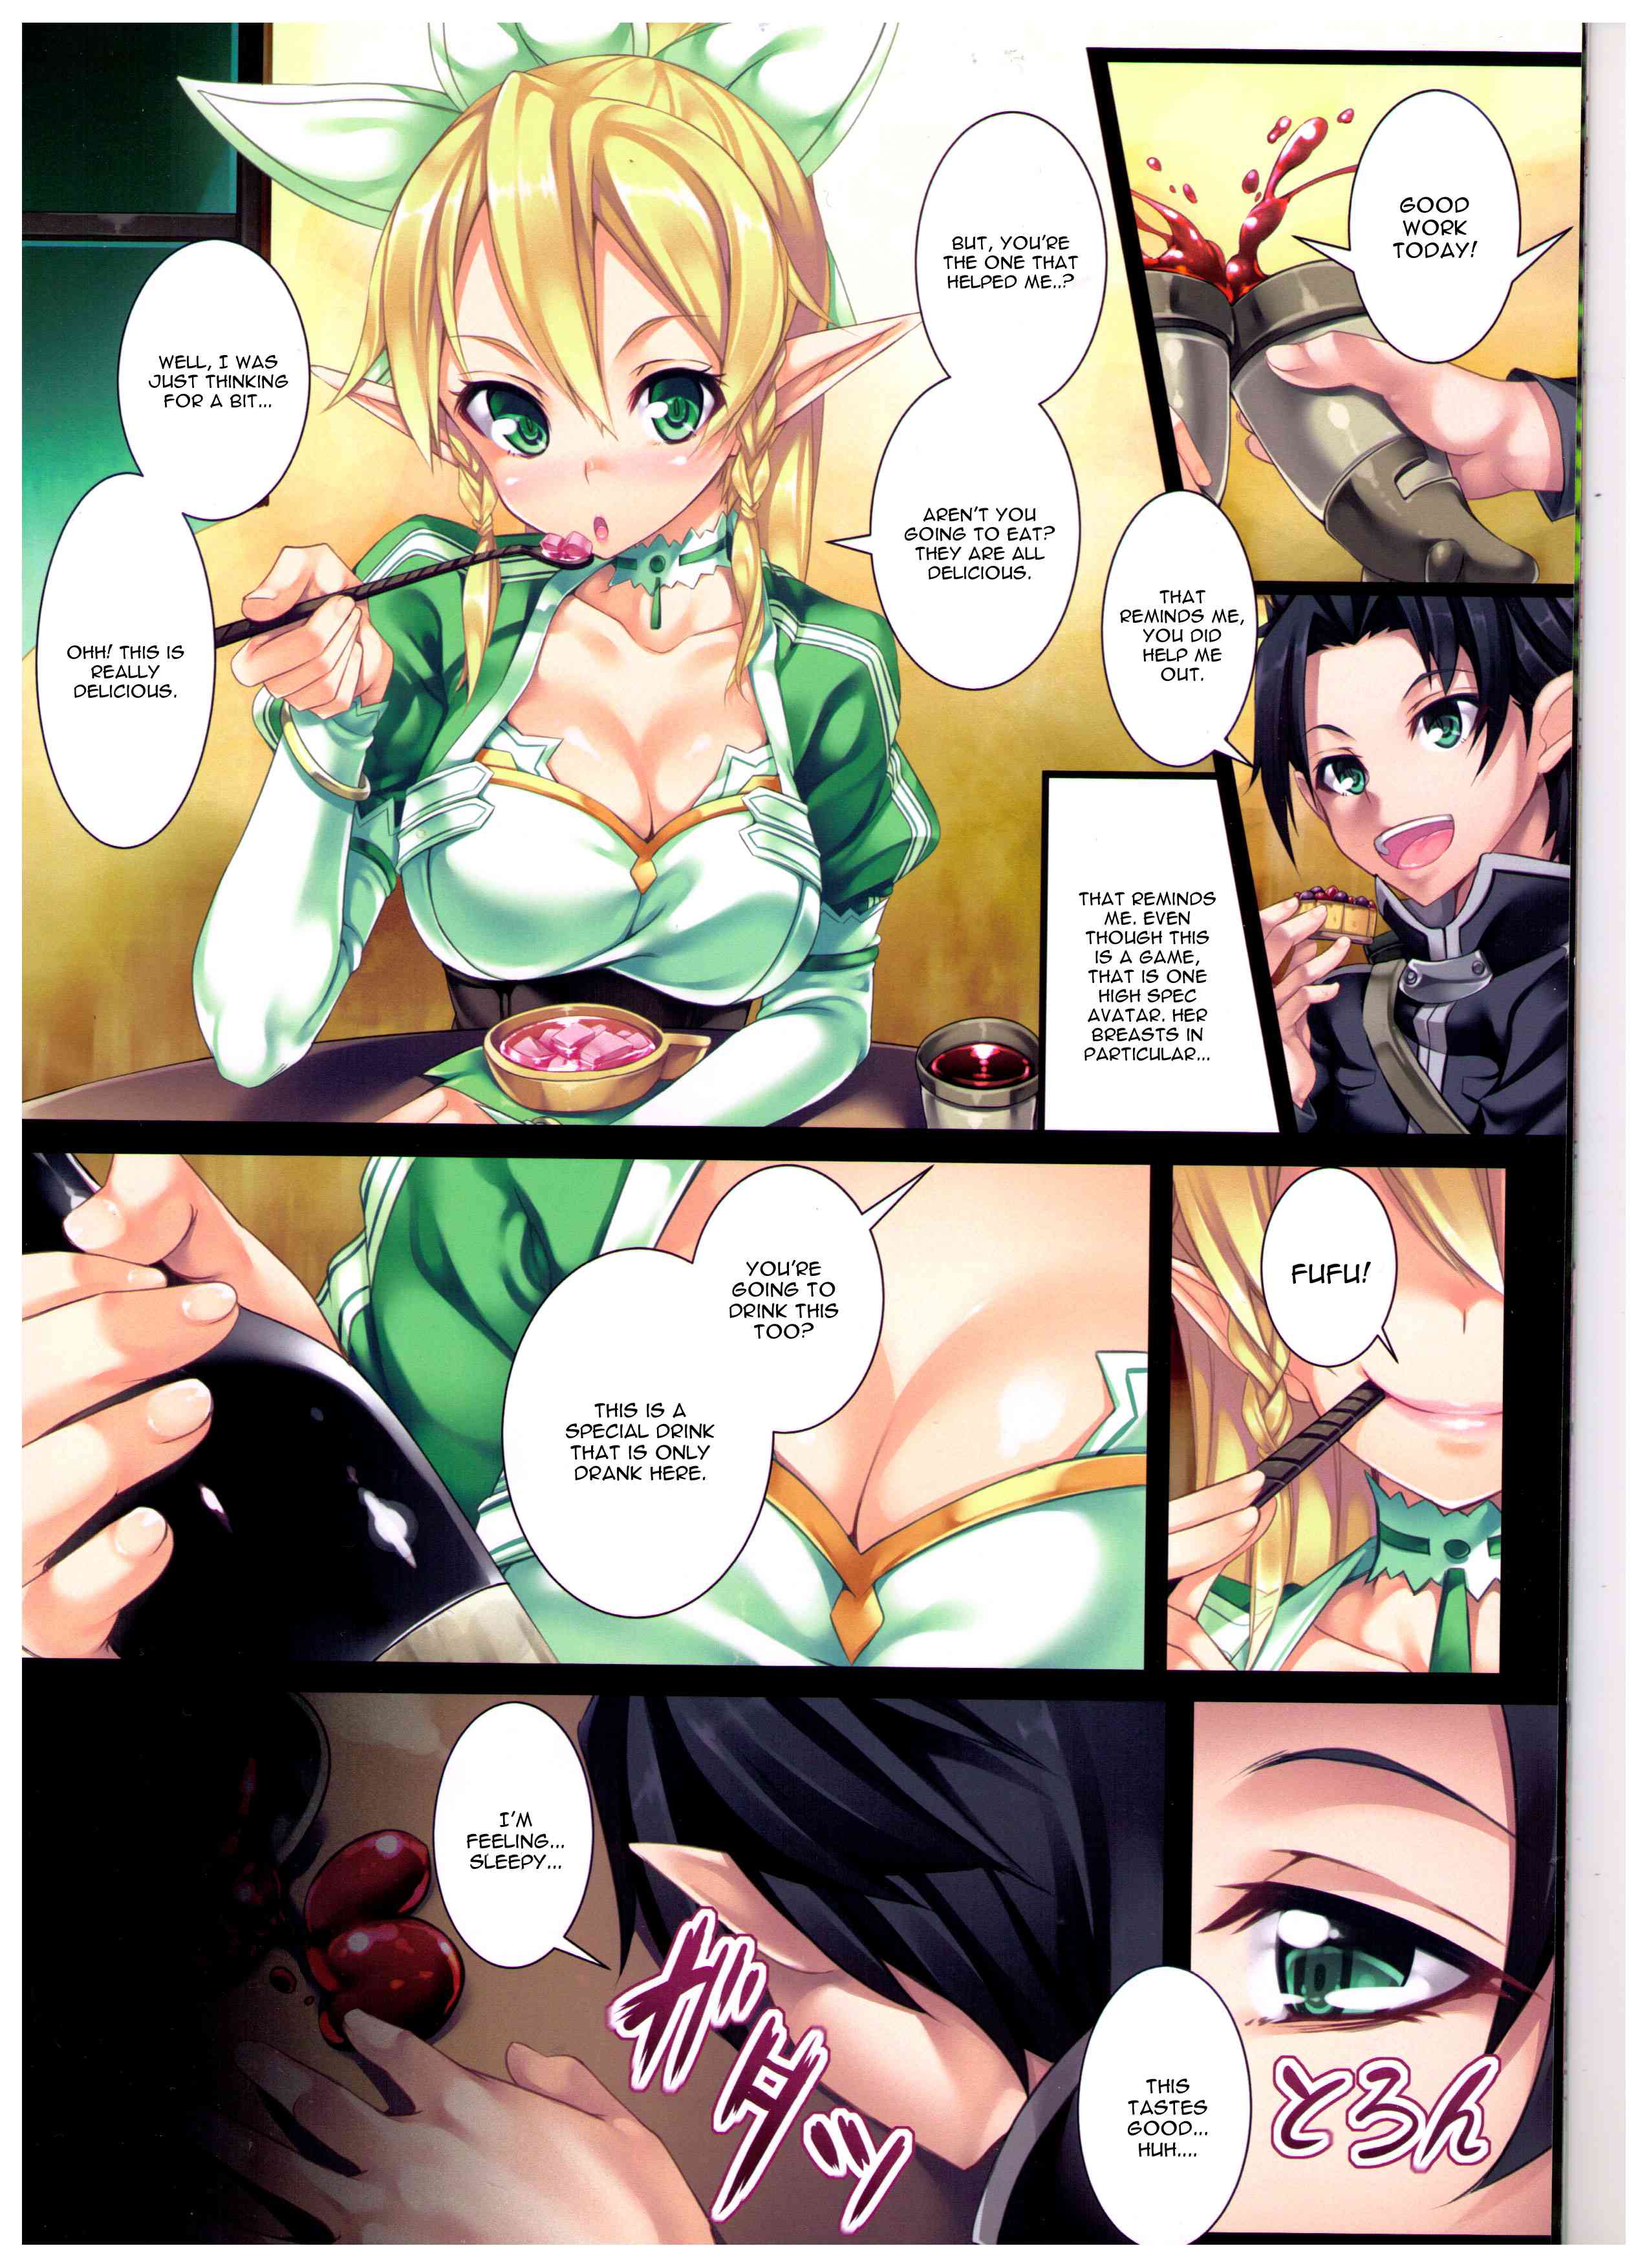 Reading Lr Hentai 3 Lr 03 Sword Art Online Page 2 Hentai Manga Online At Hentai2read